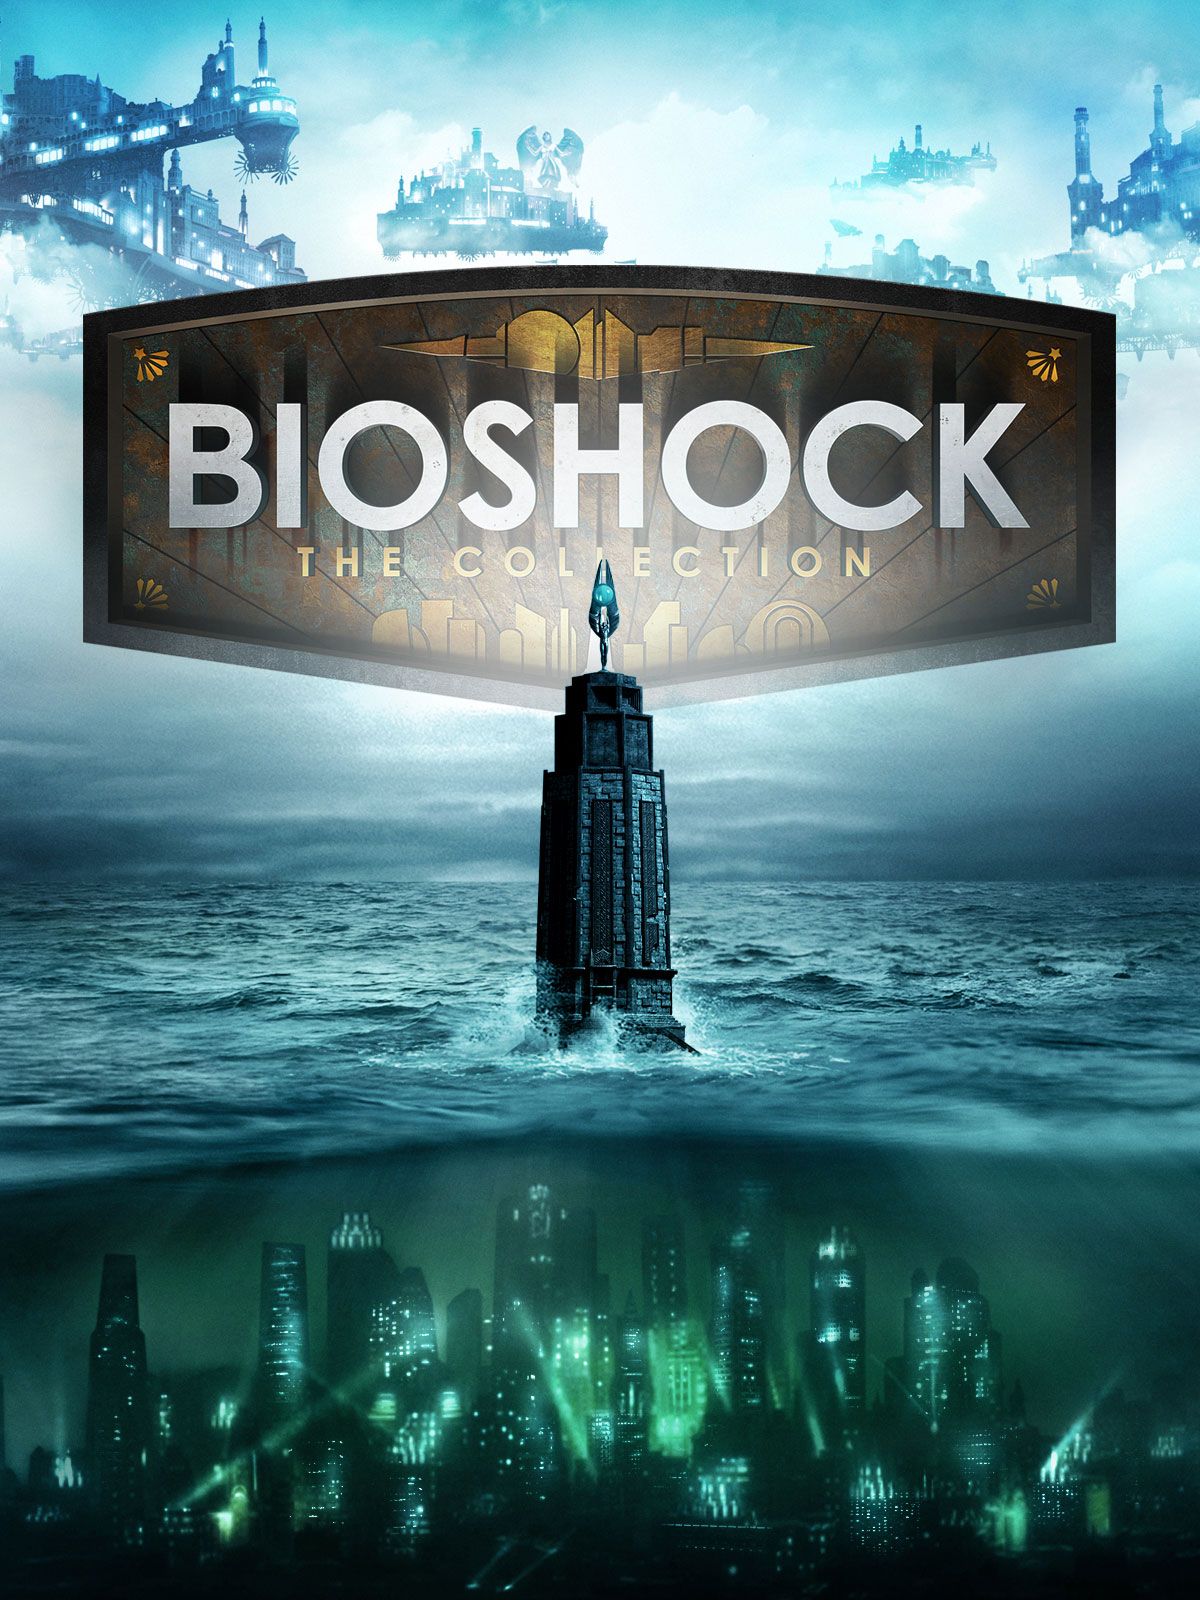 bioshock pc download free